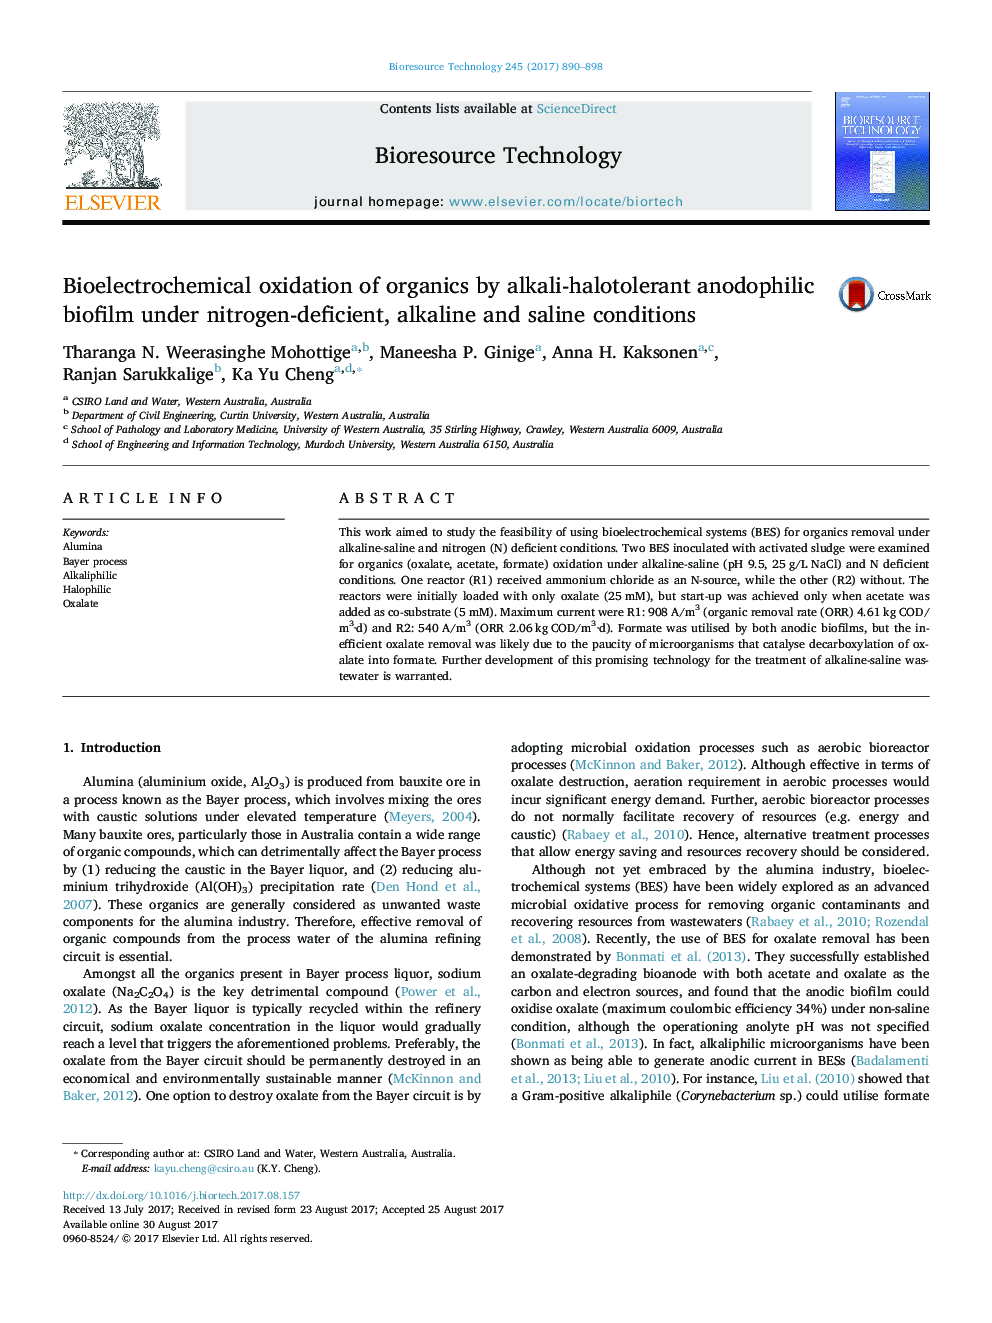 Bioelectrochemical oxidation of organics by alkali-halotolerant anodophilic biofilm under nitrogen-deficient, alkaline and saline conditions